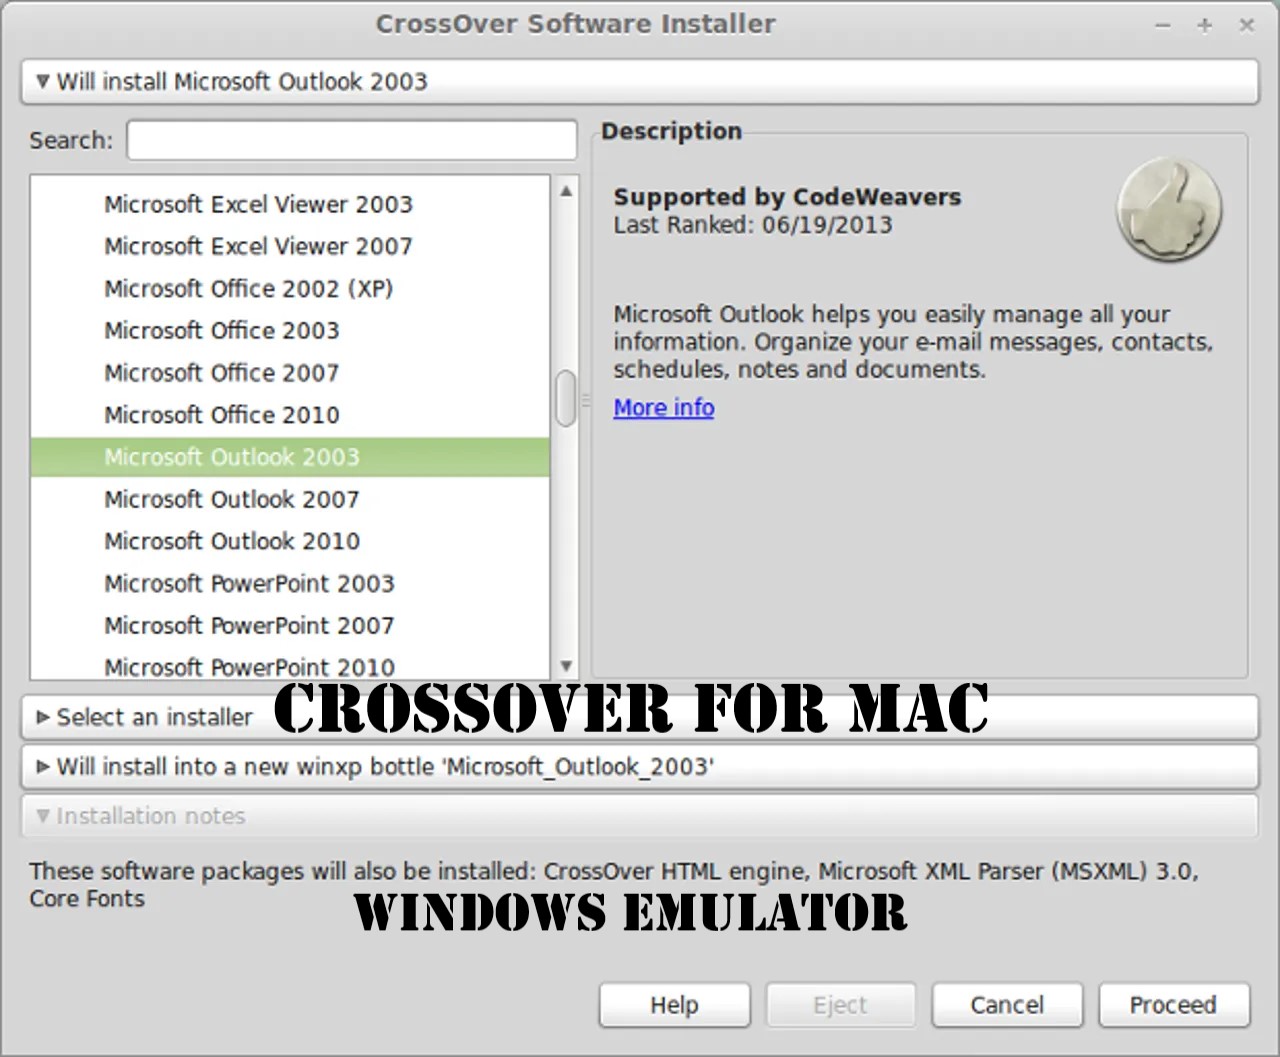 Crossover dla komputerów Mac — darmowy emulator systemu Windows